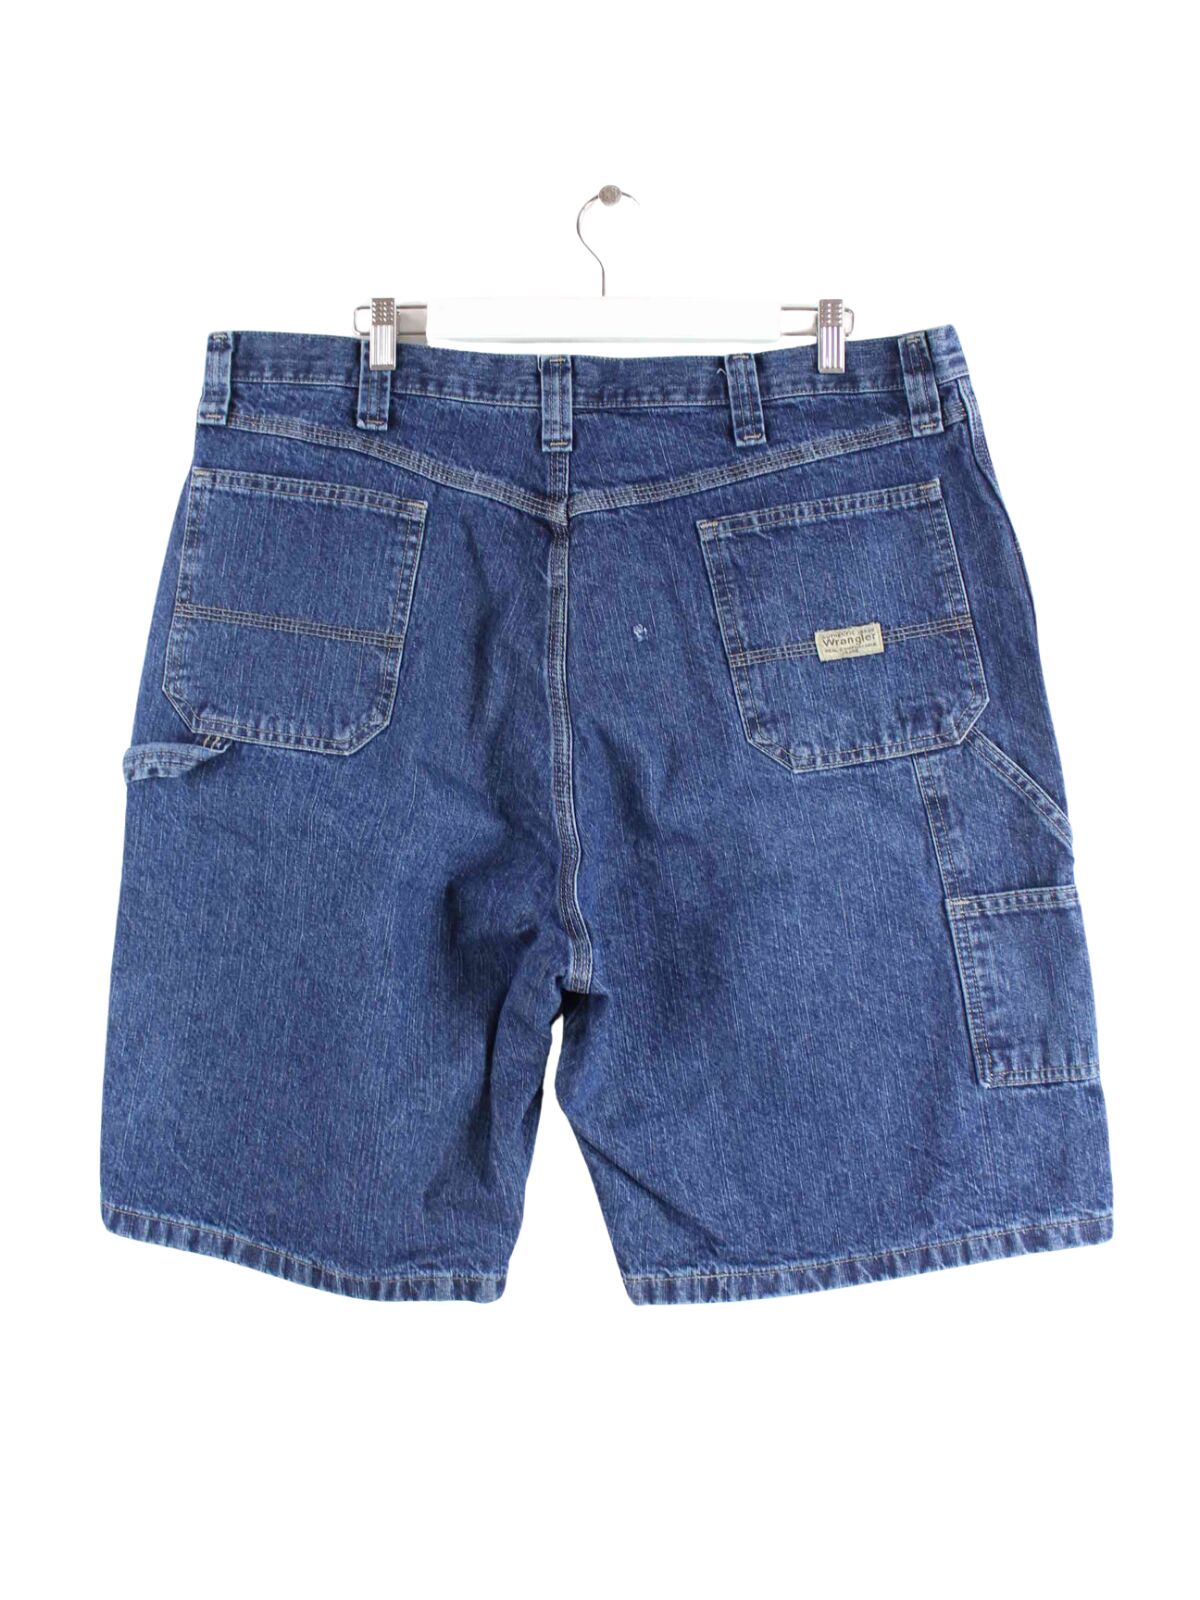 Wrangler Carpenter Workwear Jeans Shorts Blau W40 (back image)